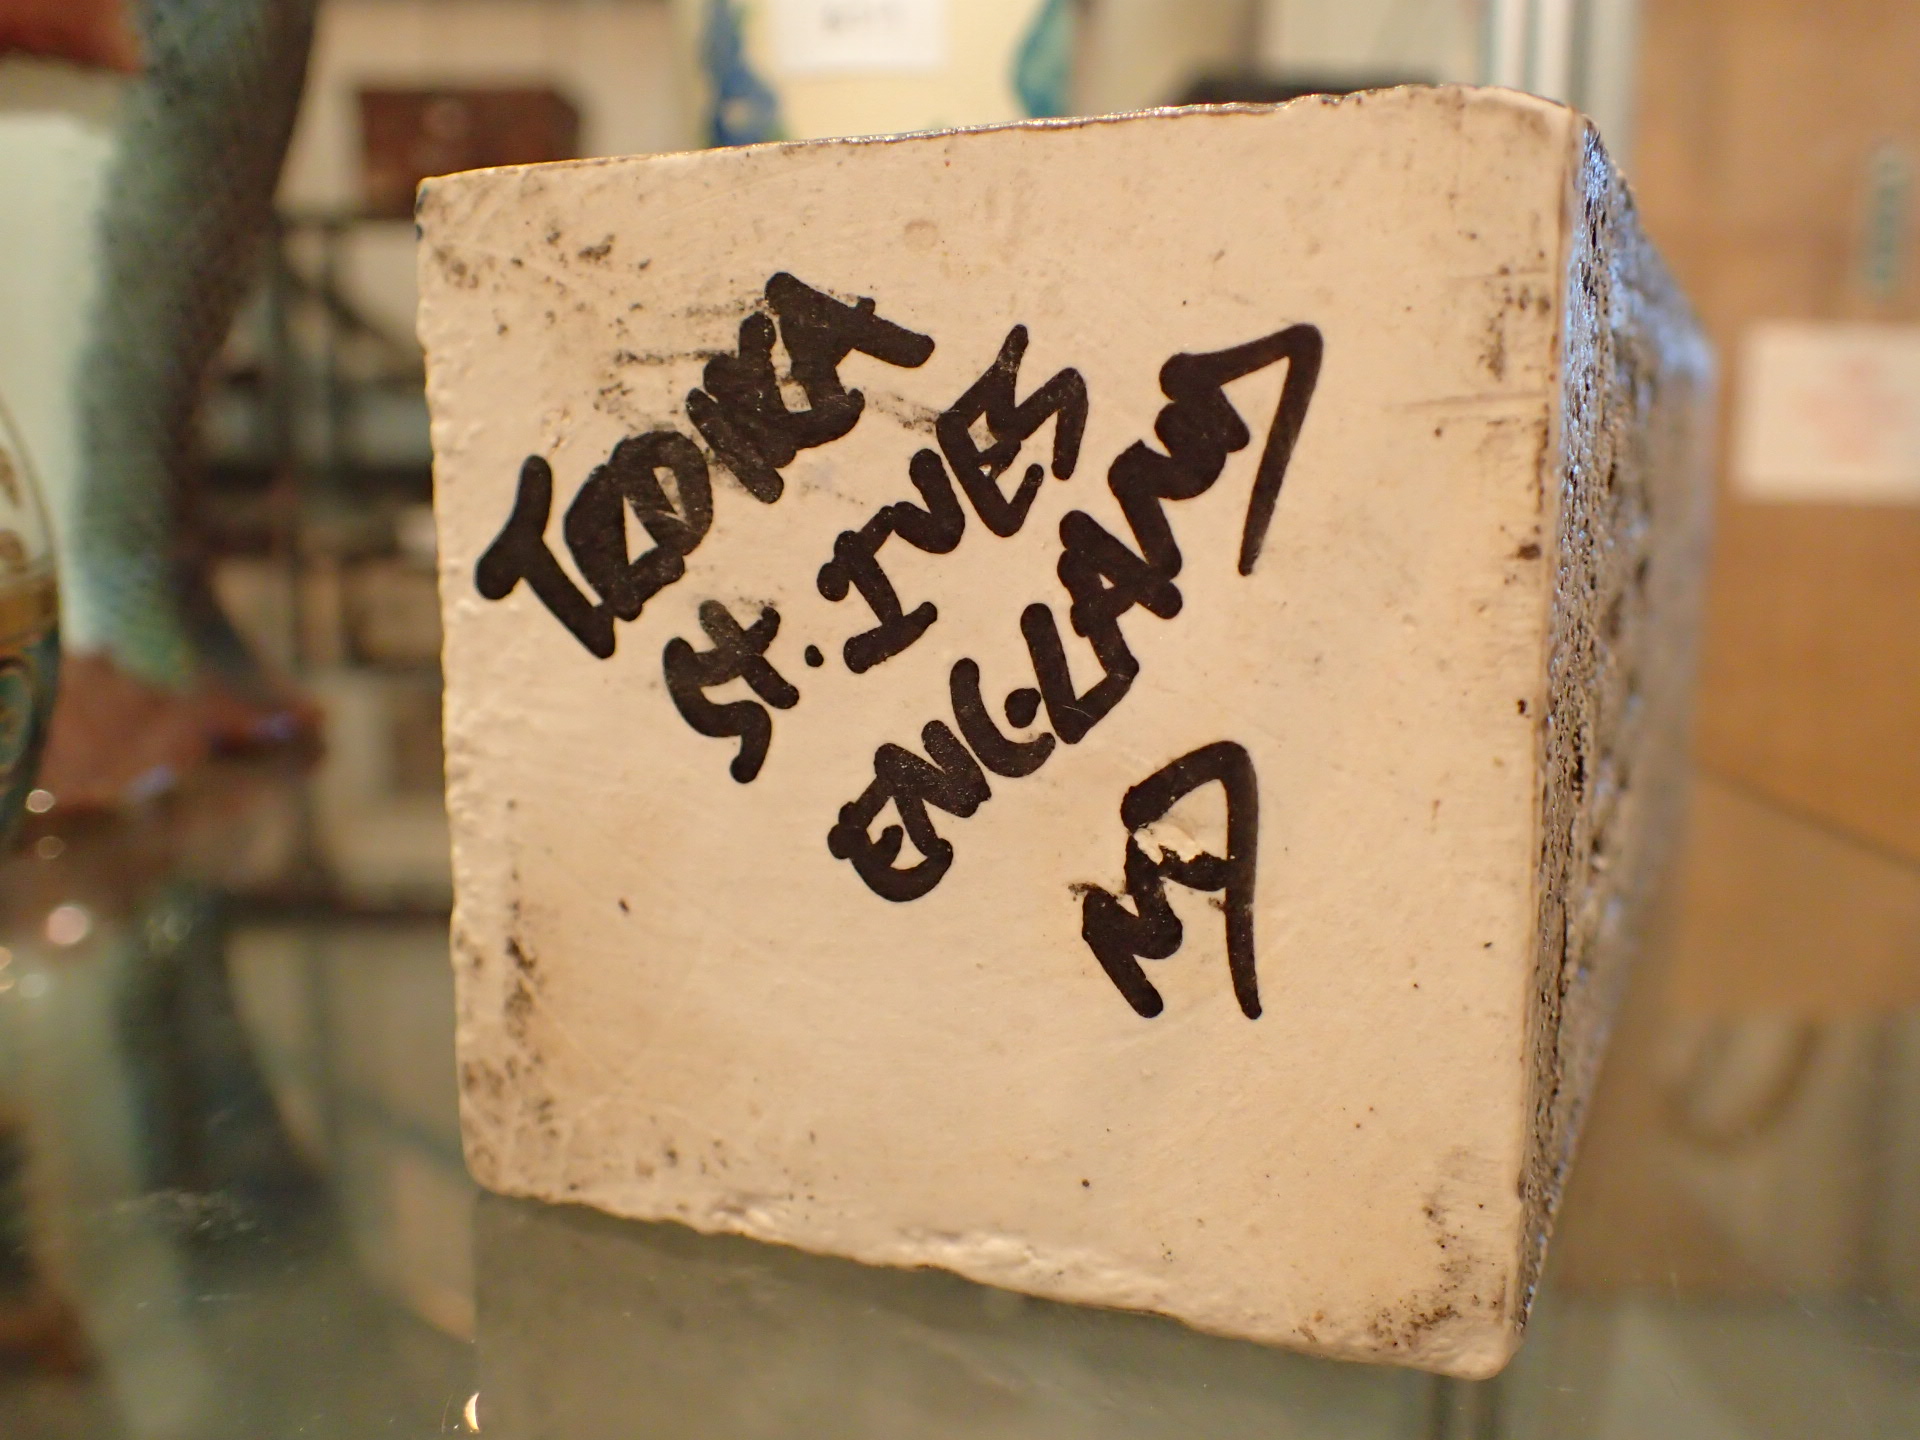 Troika slab vase H: 25 cm marked Troika St Ives England ND - Image 2 of 2